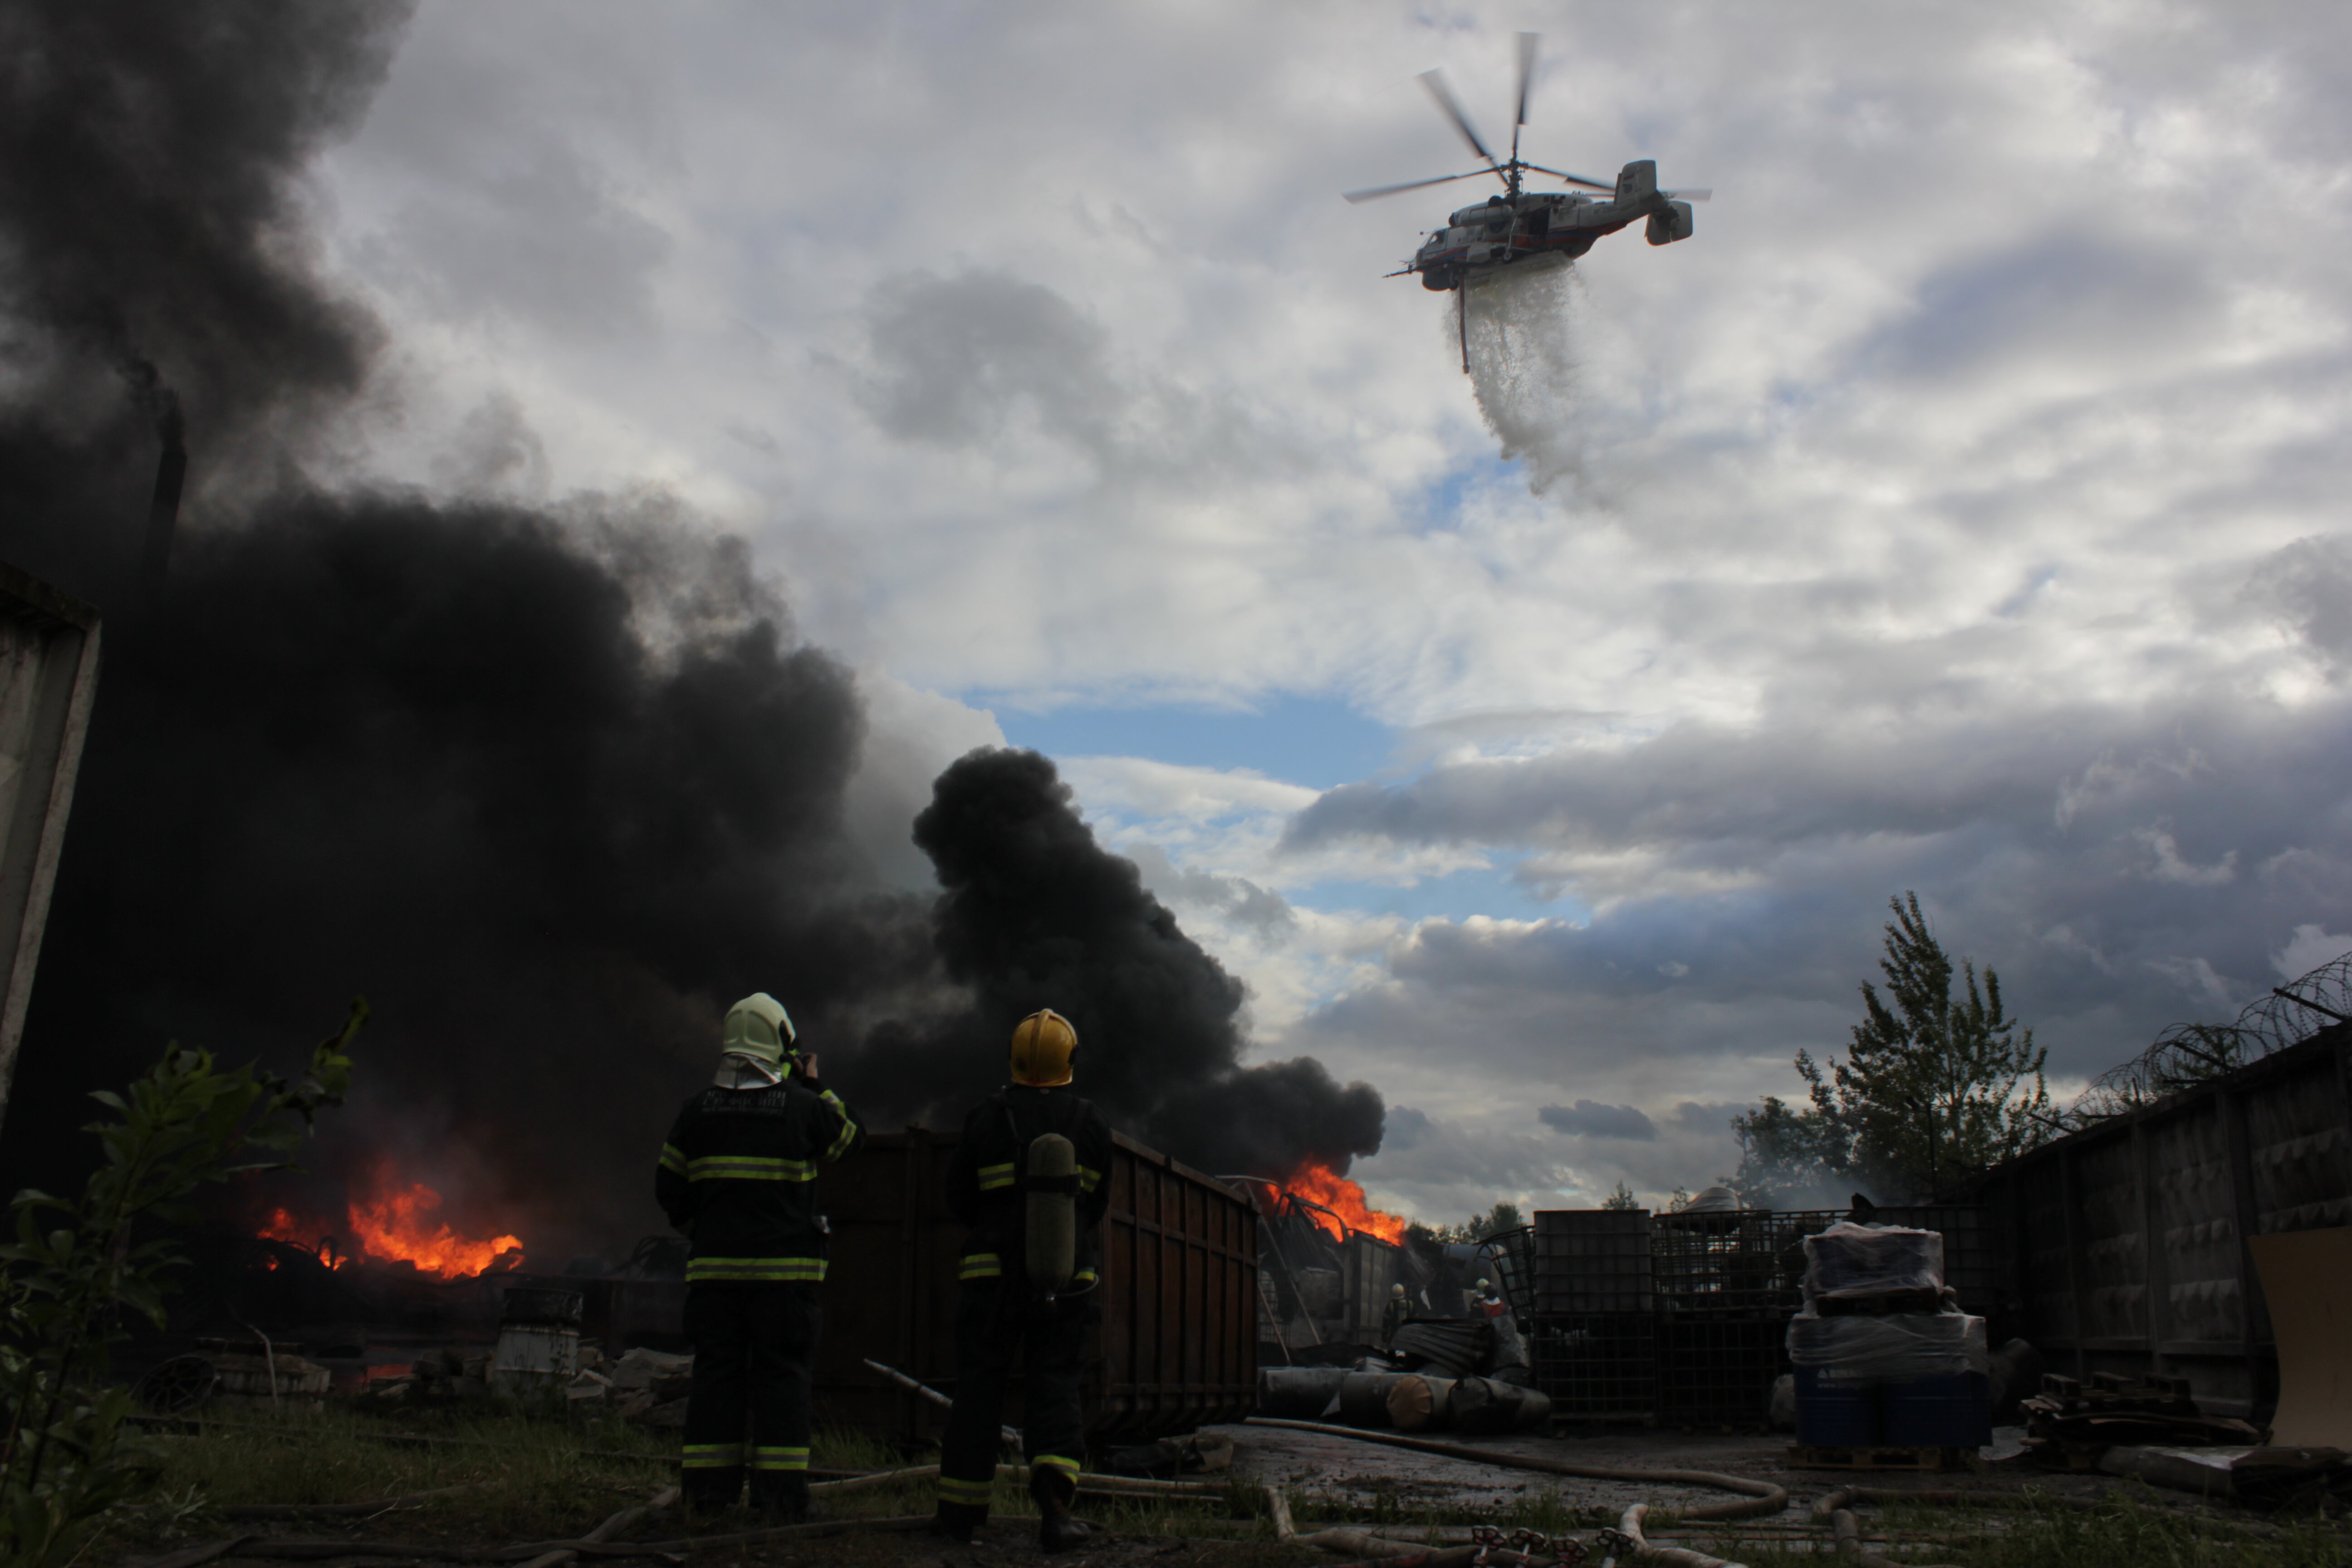 МЧС опубликовало видео тушения пожара на лакокрасочном заводе в Петербурге